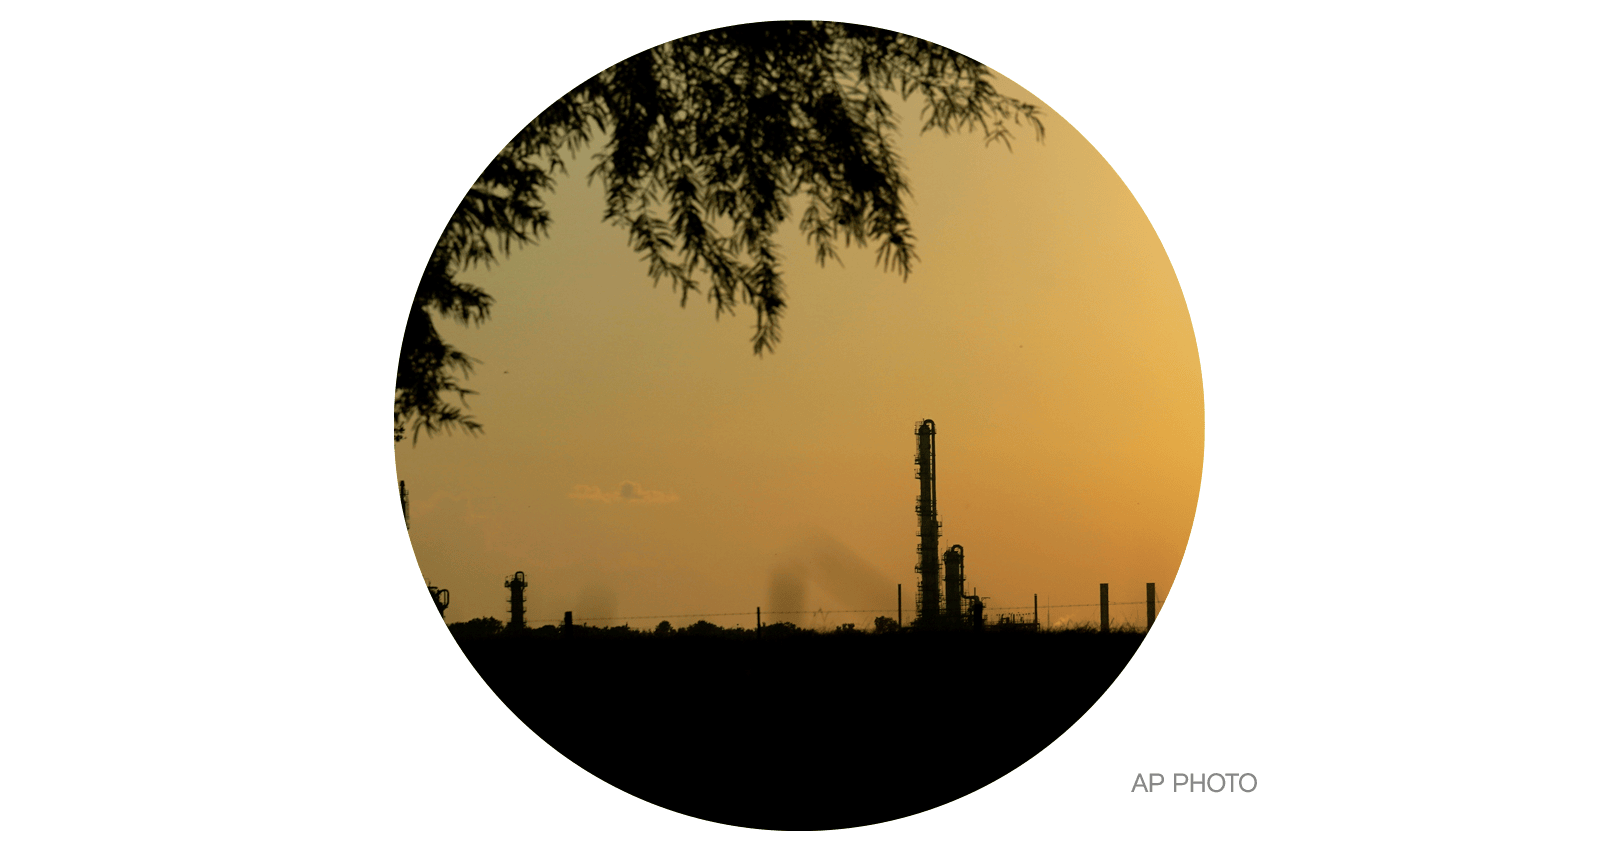 The Denka Performance Elastomer Plant at sunset in Reserve, La.